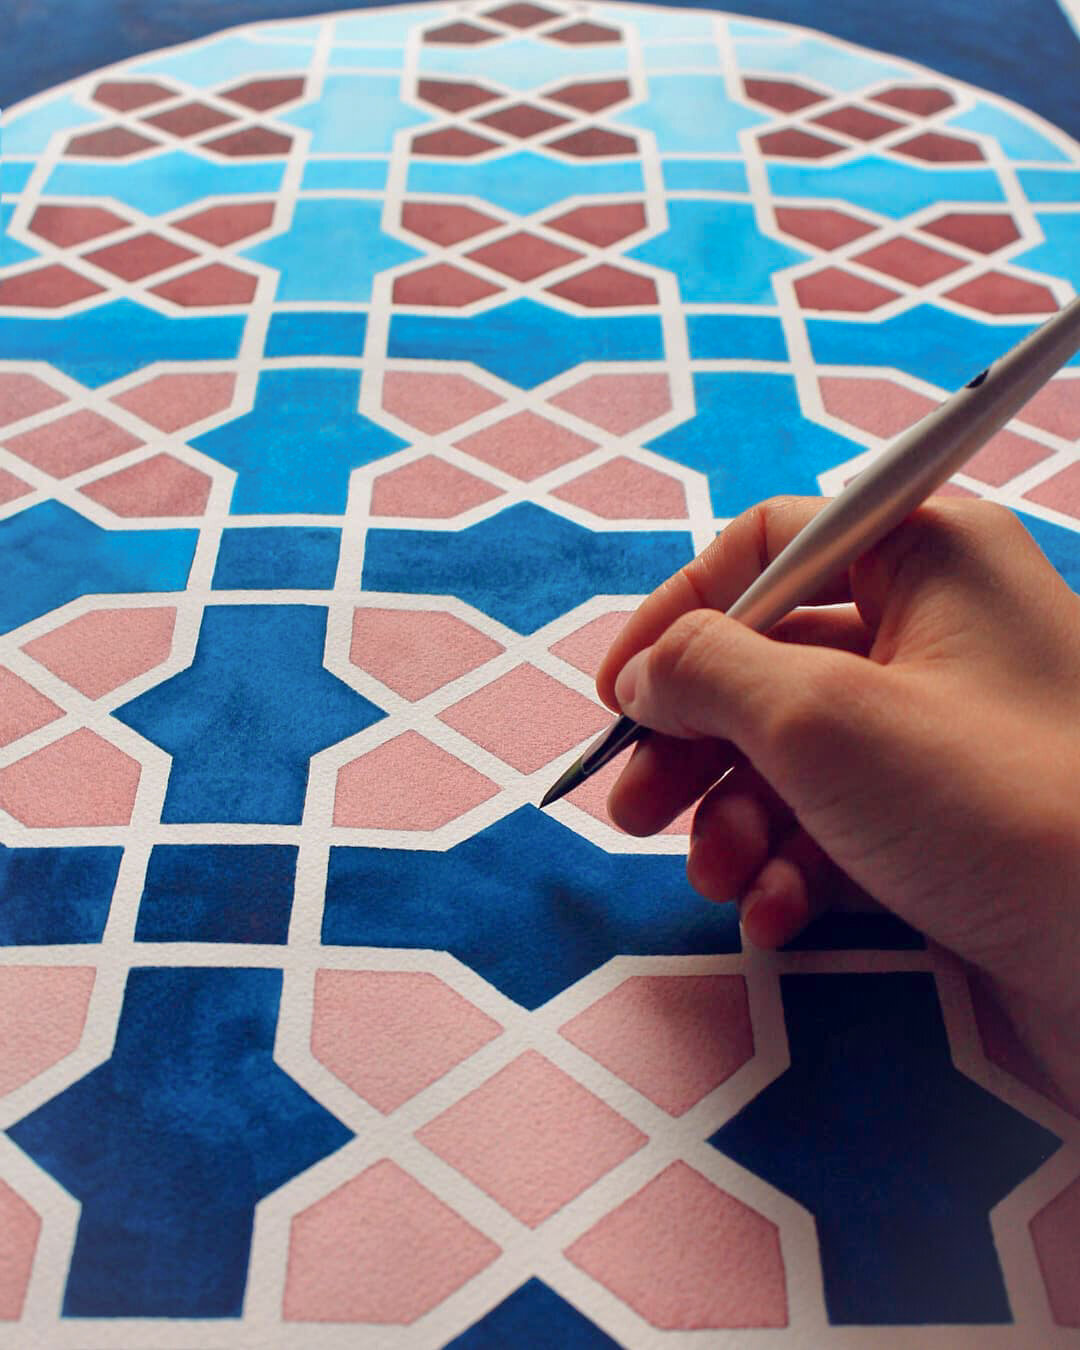 Islamic geometric pattern design